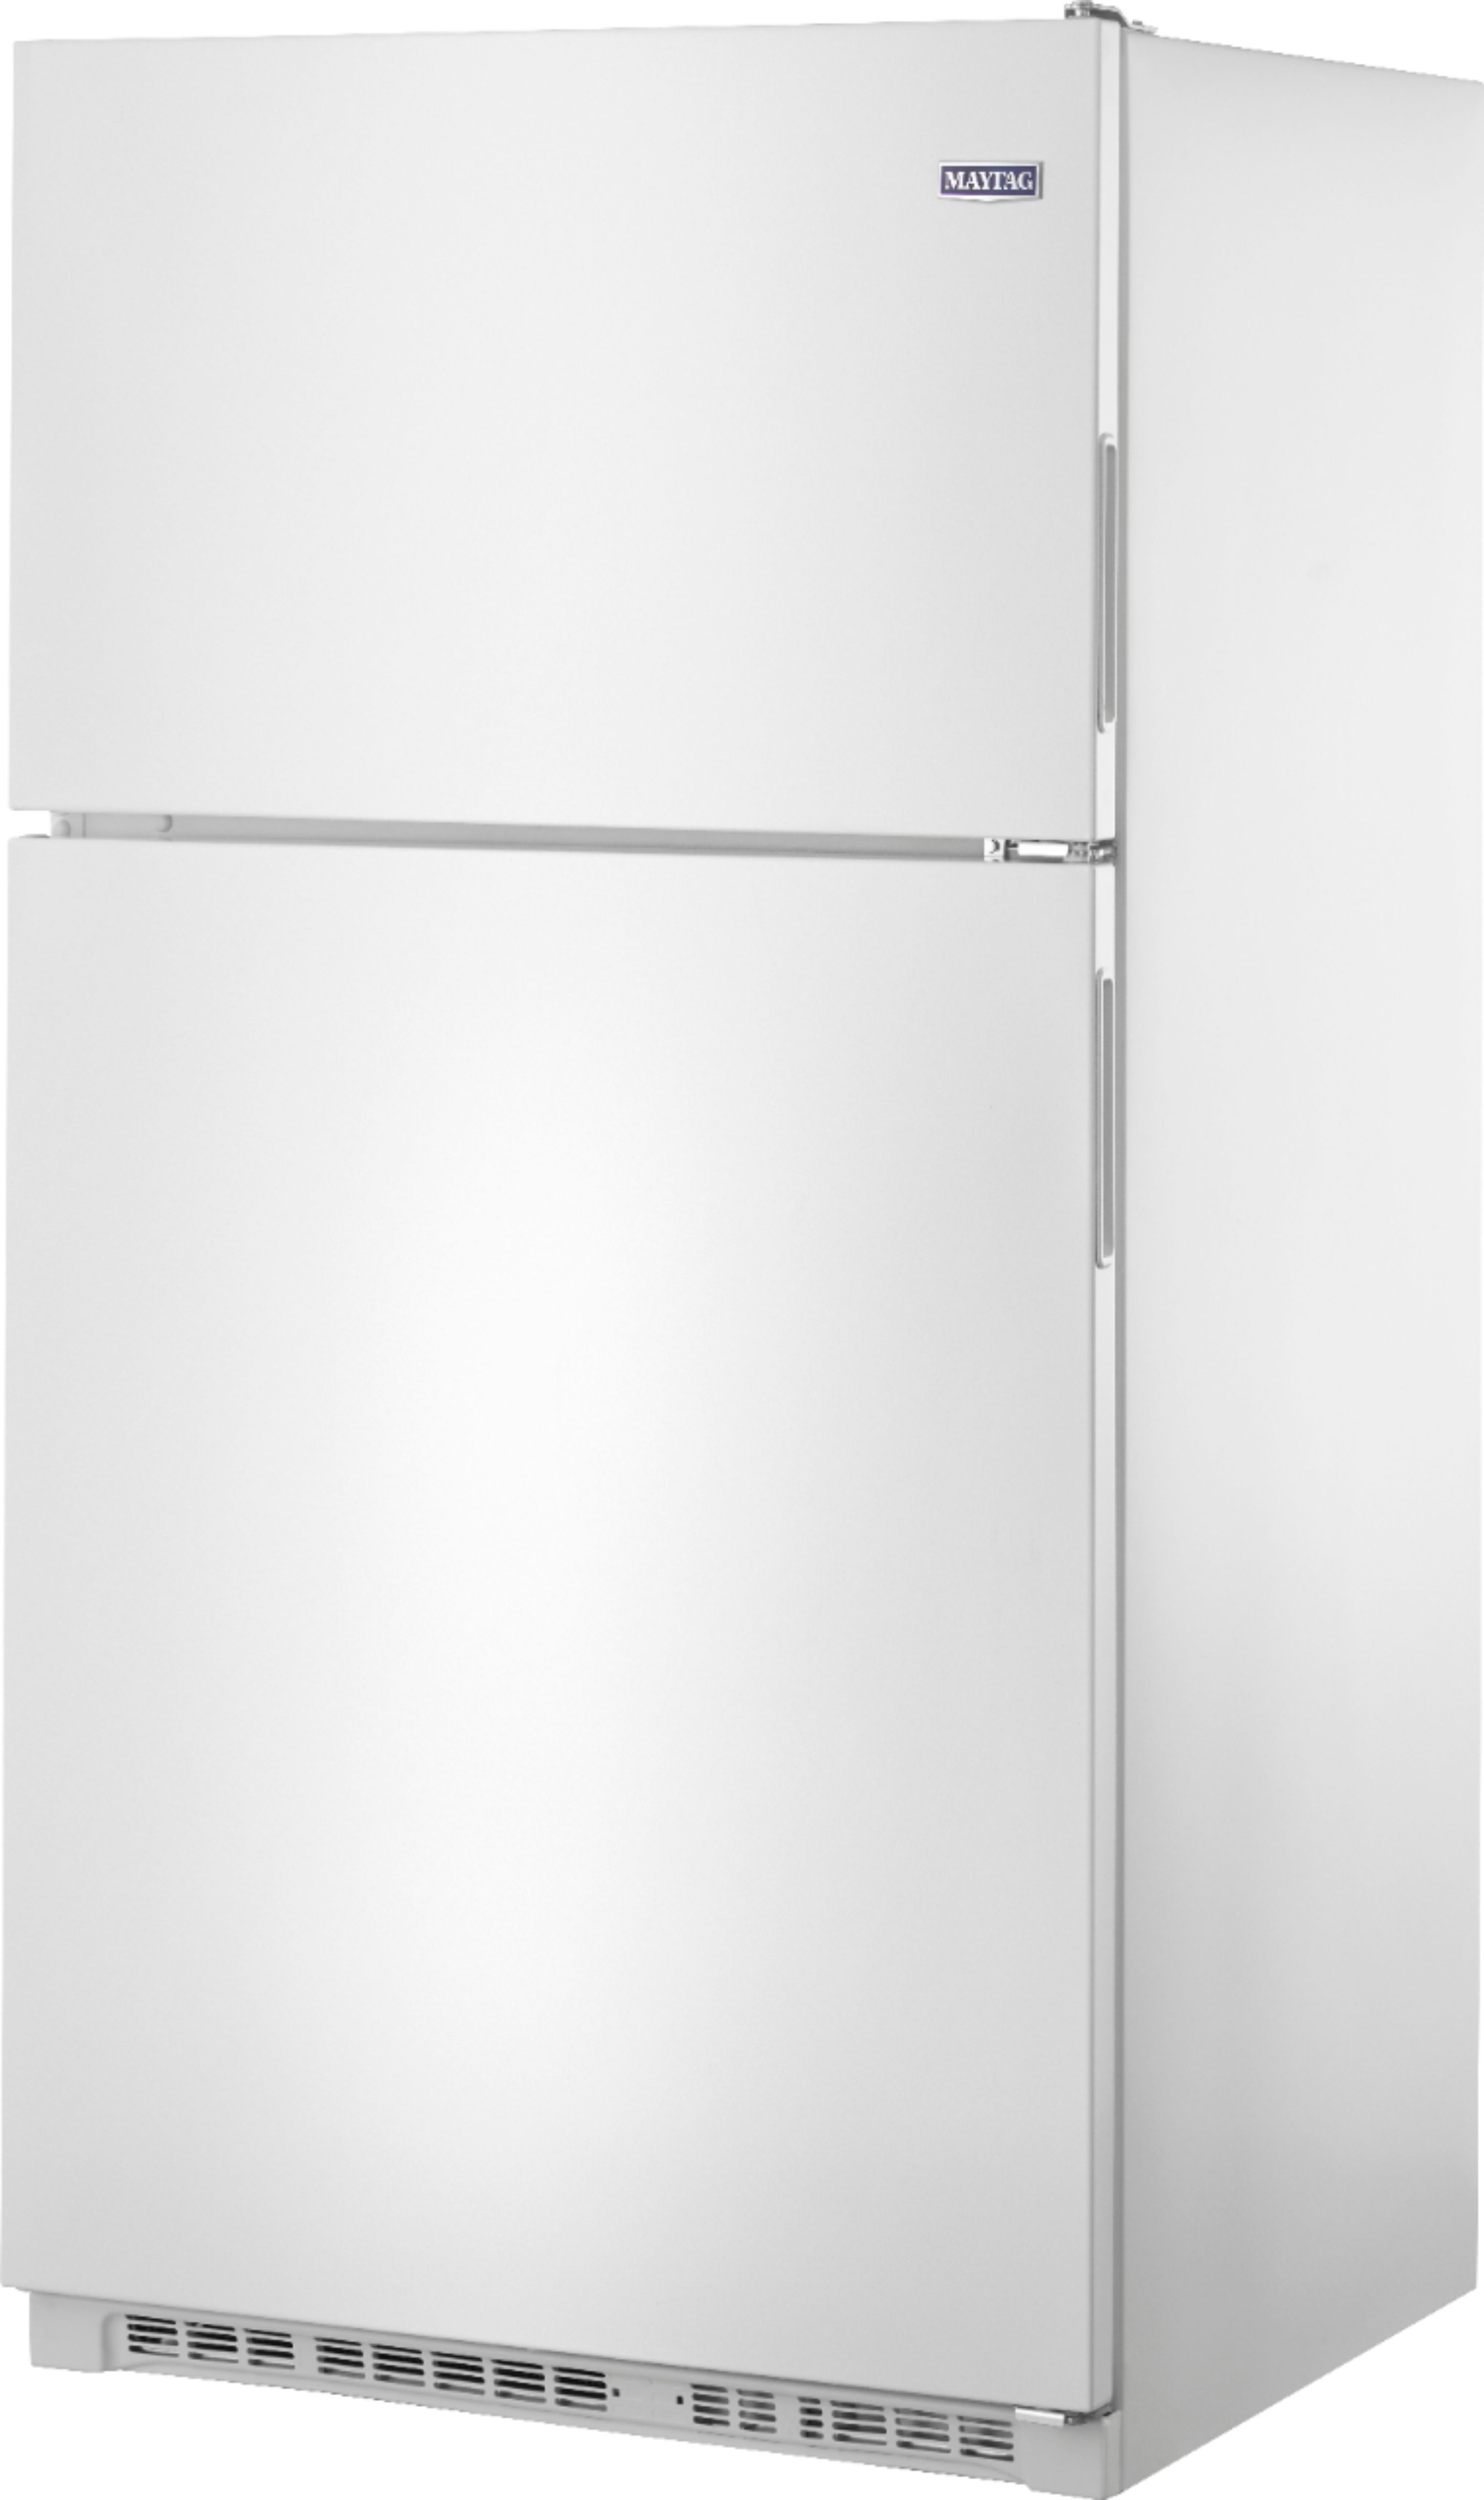 Left View: GE - 11.6 Cu. Ft. Top-Freezer Refrigerator - Black